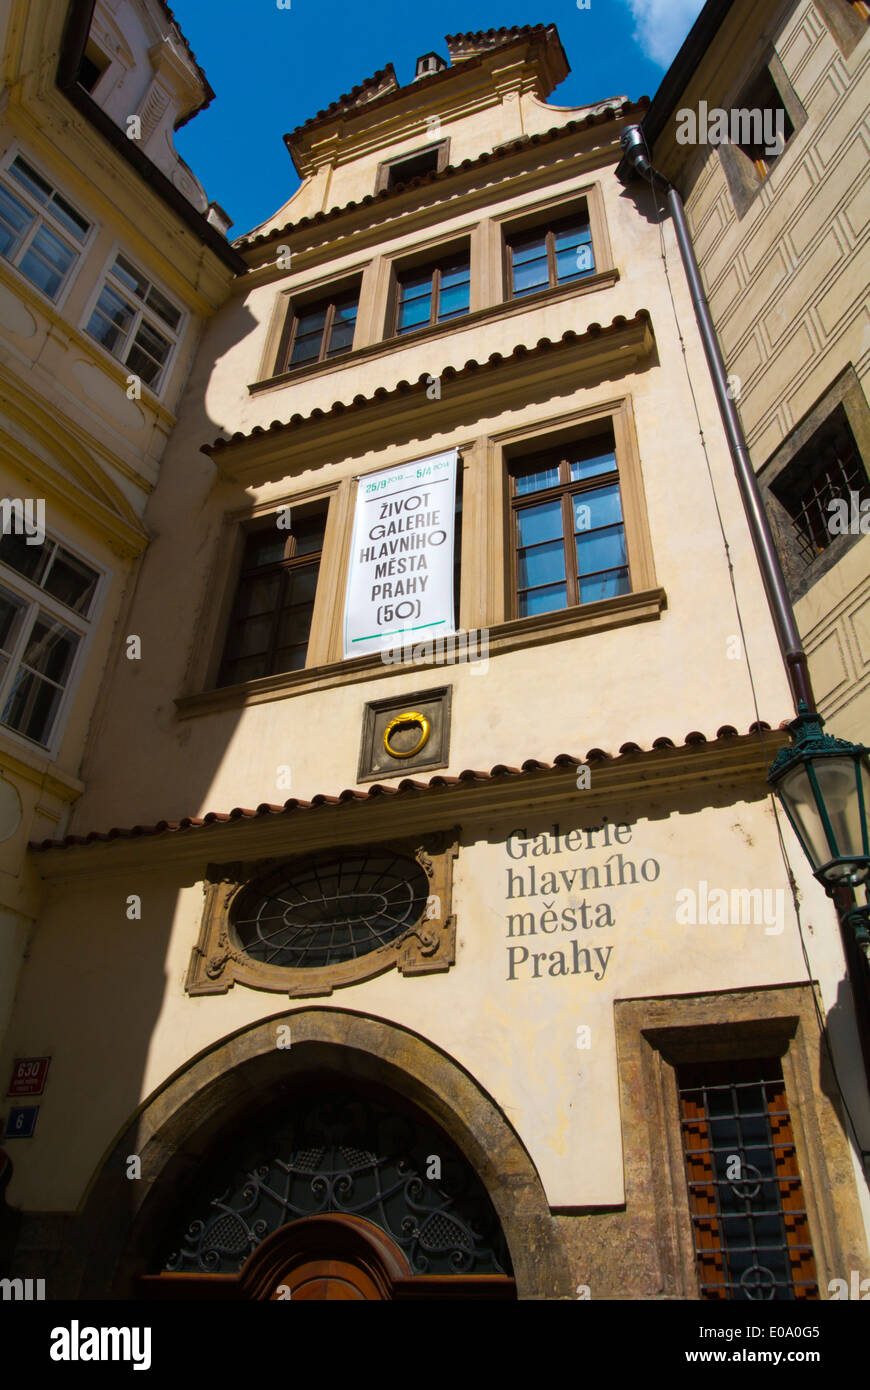 Galerie hlavniho mesta Prahy, Prague city art gallery, Ungelt courtyard, Stare Mesto, Old Town, Prague, Czech Republic, Europe Stock Photo